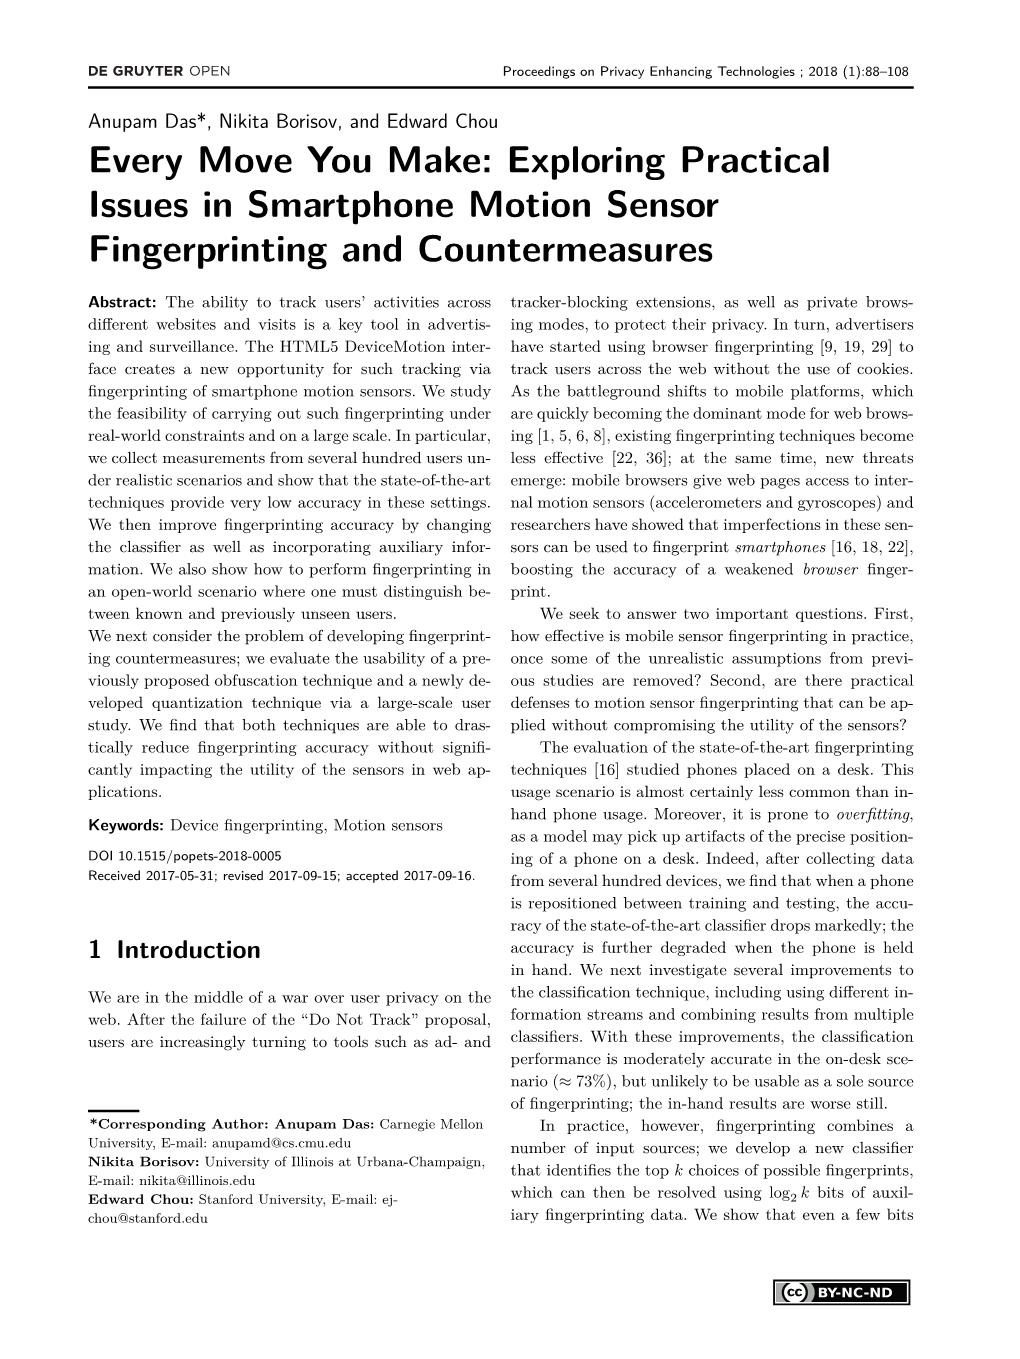 Exploring Practical Issues in Smartphone Motion Sensor Fingerprinting and Countermeasures